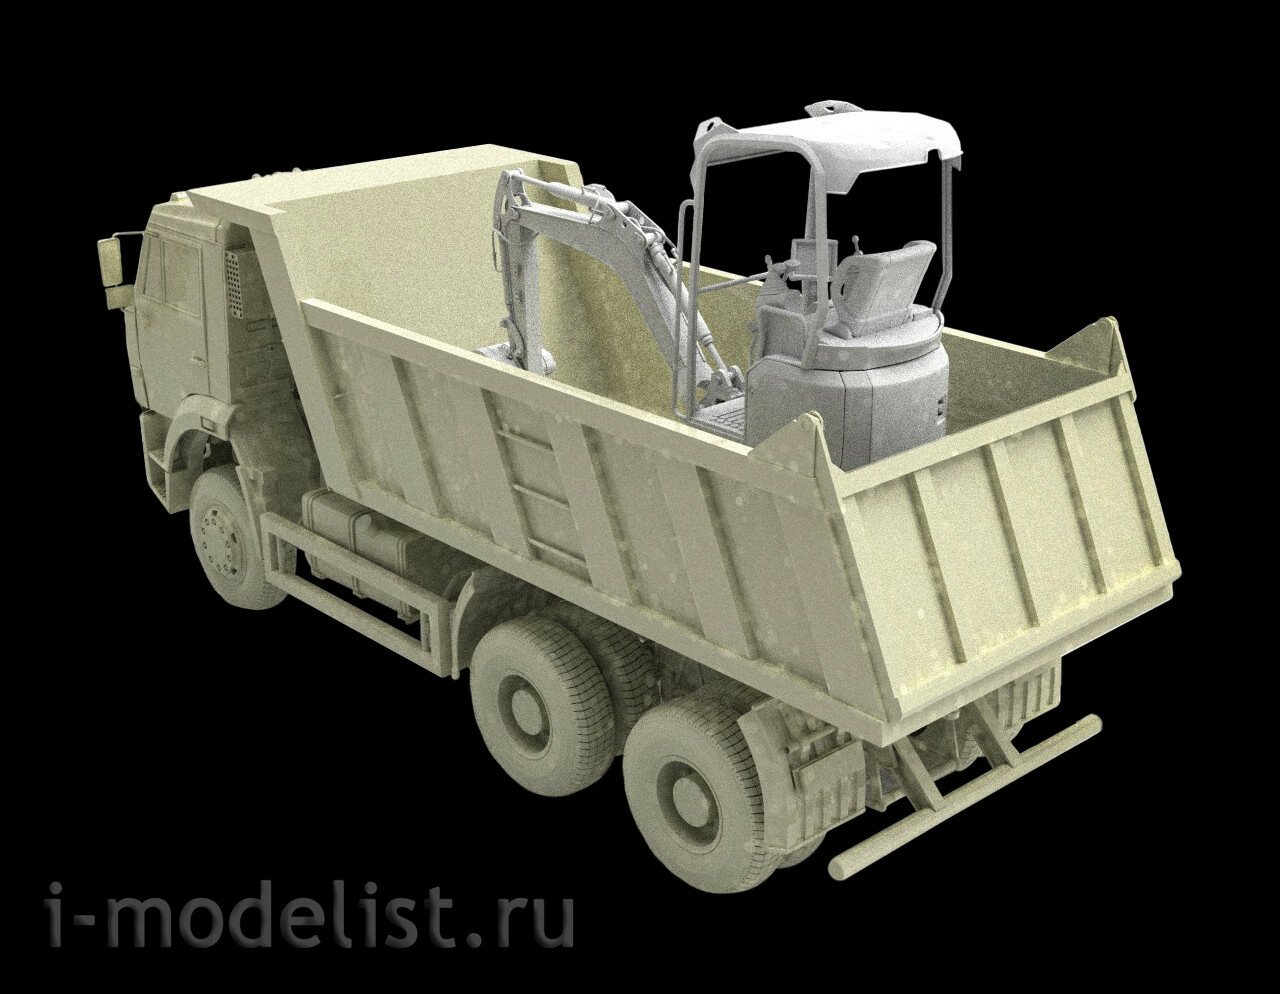 im35093 Imodelist 1/35 Mini Excavator for Model 3650 Zvezda